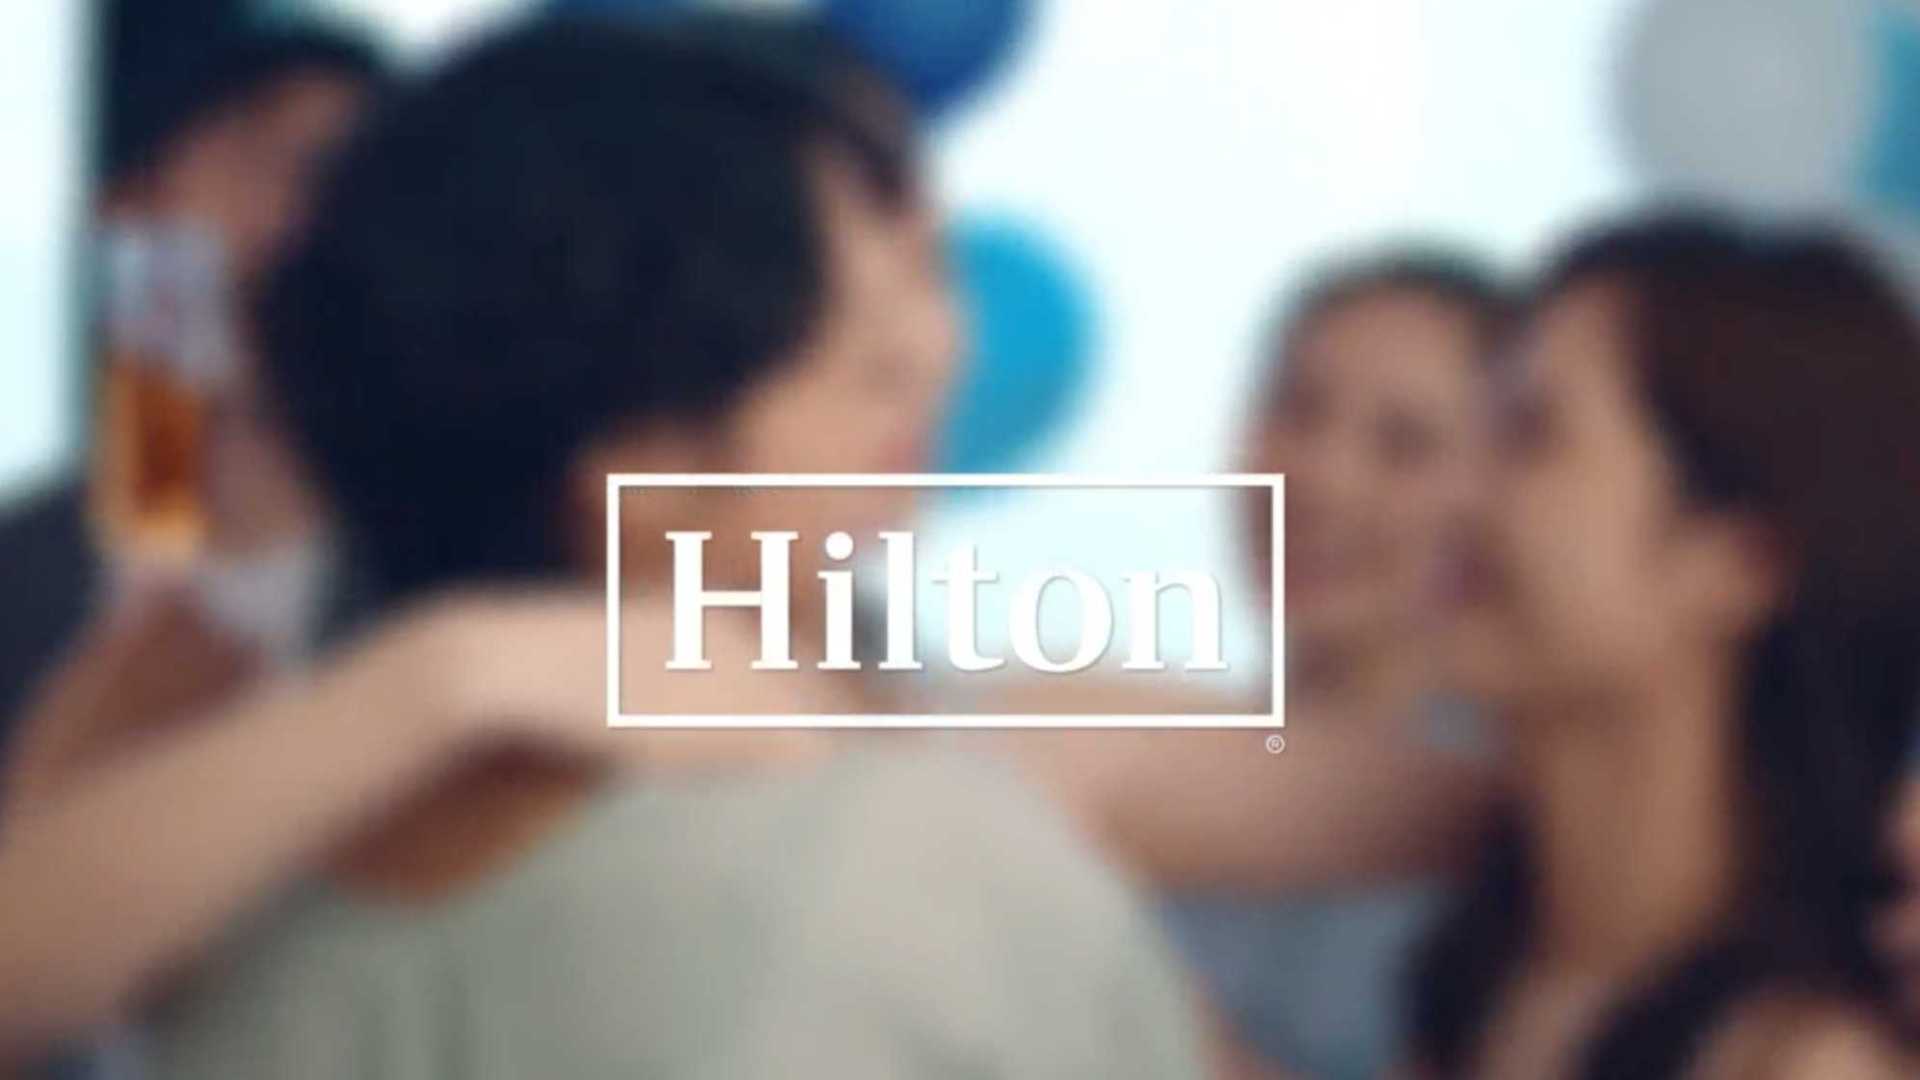 Hilton Brand Film 2021